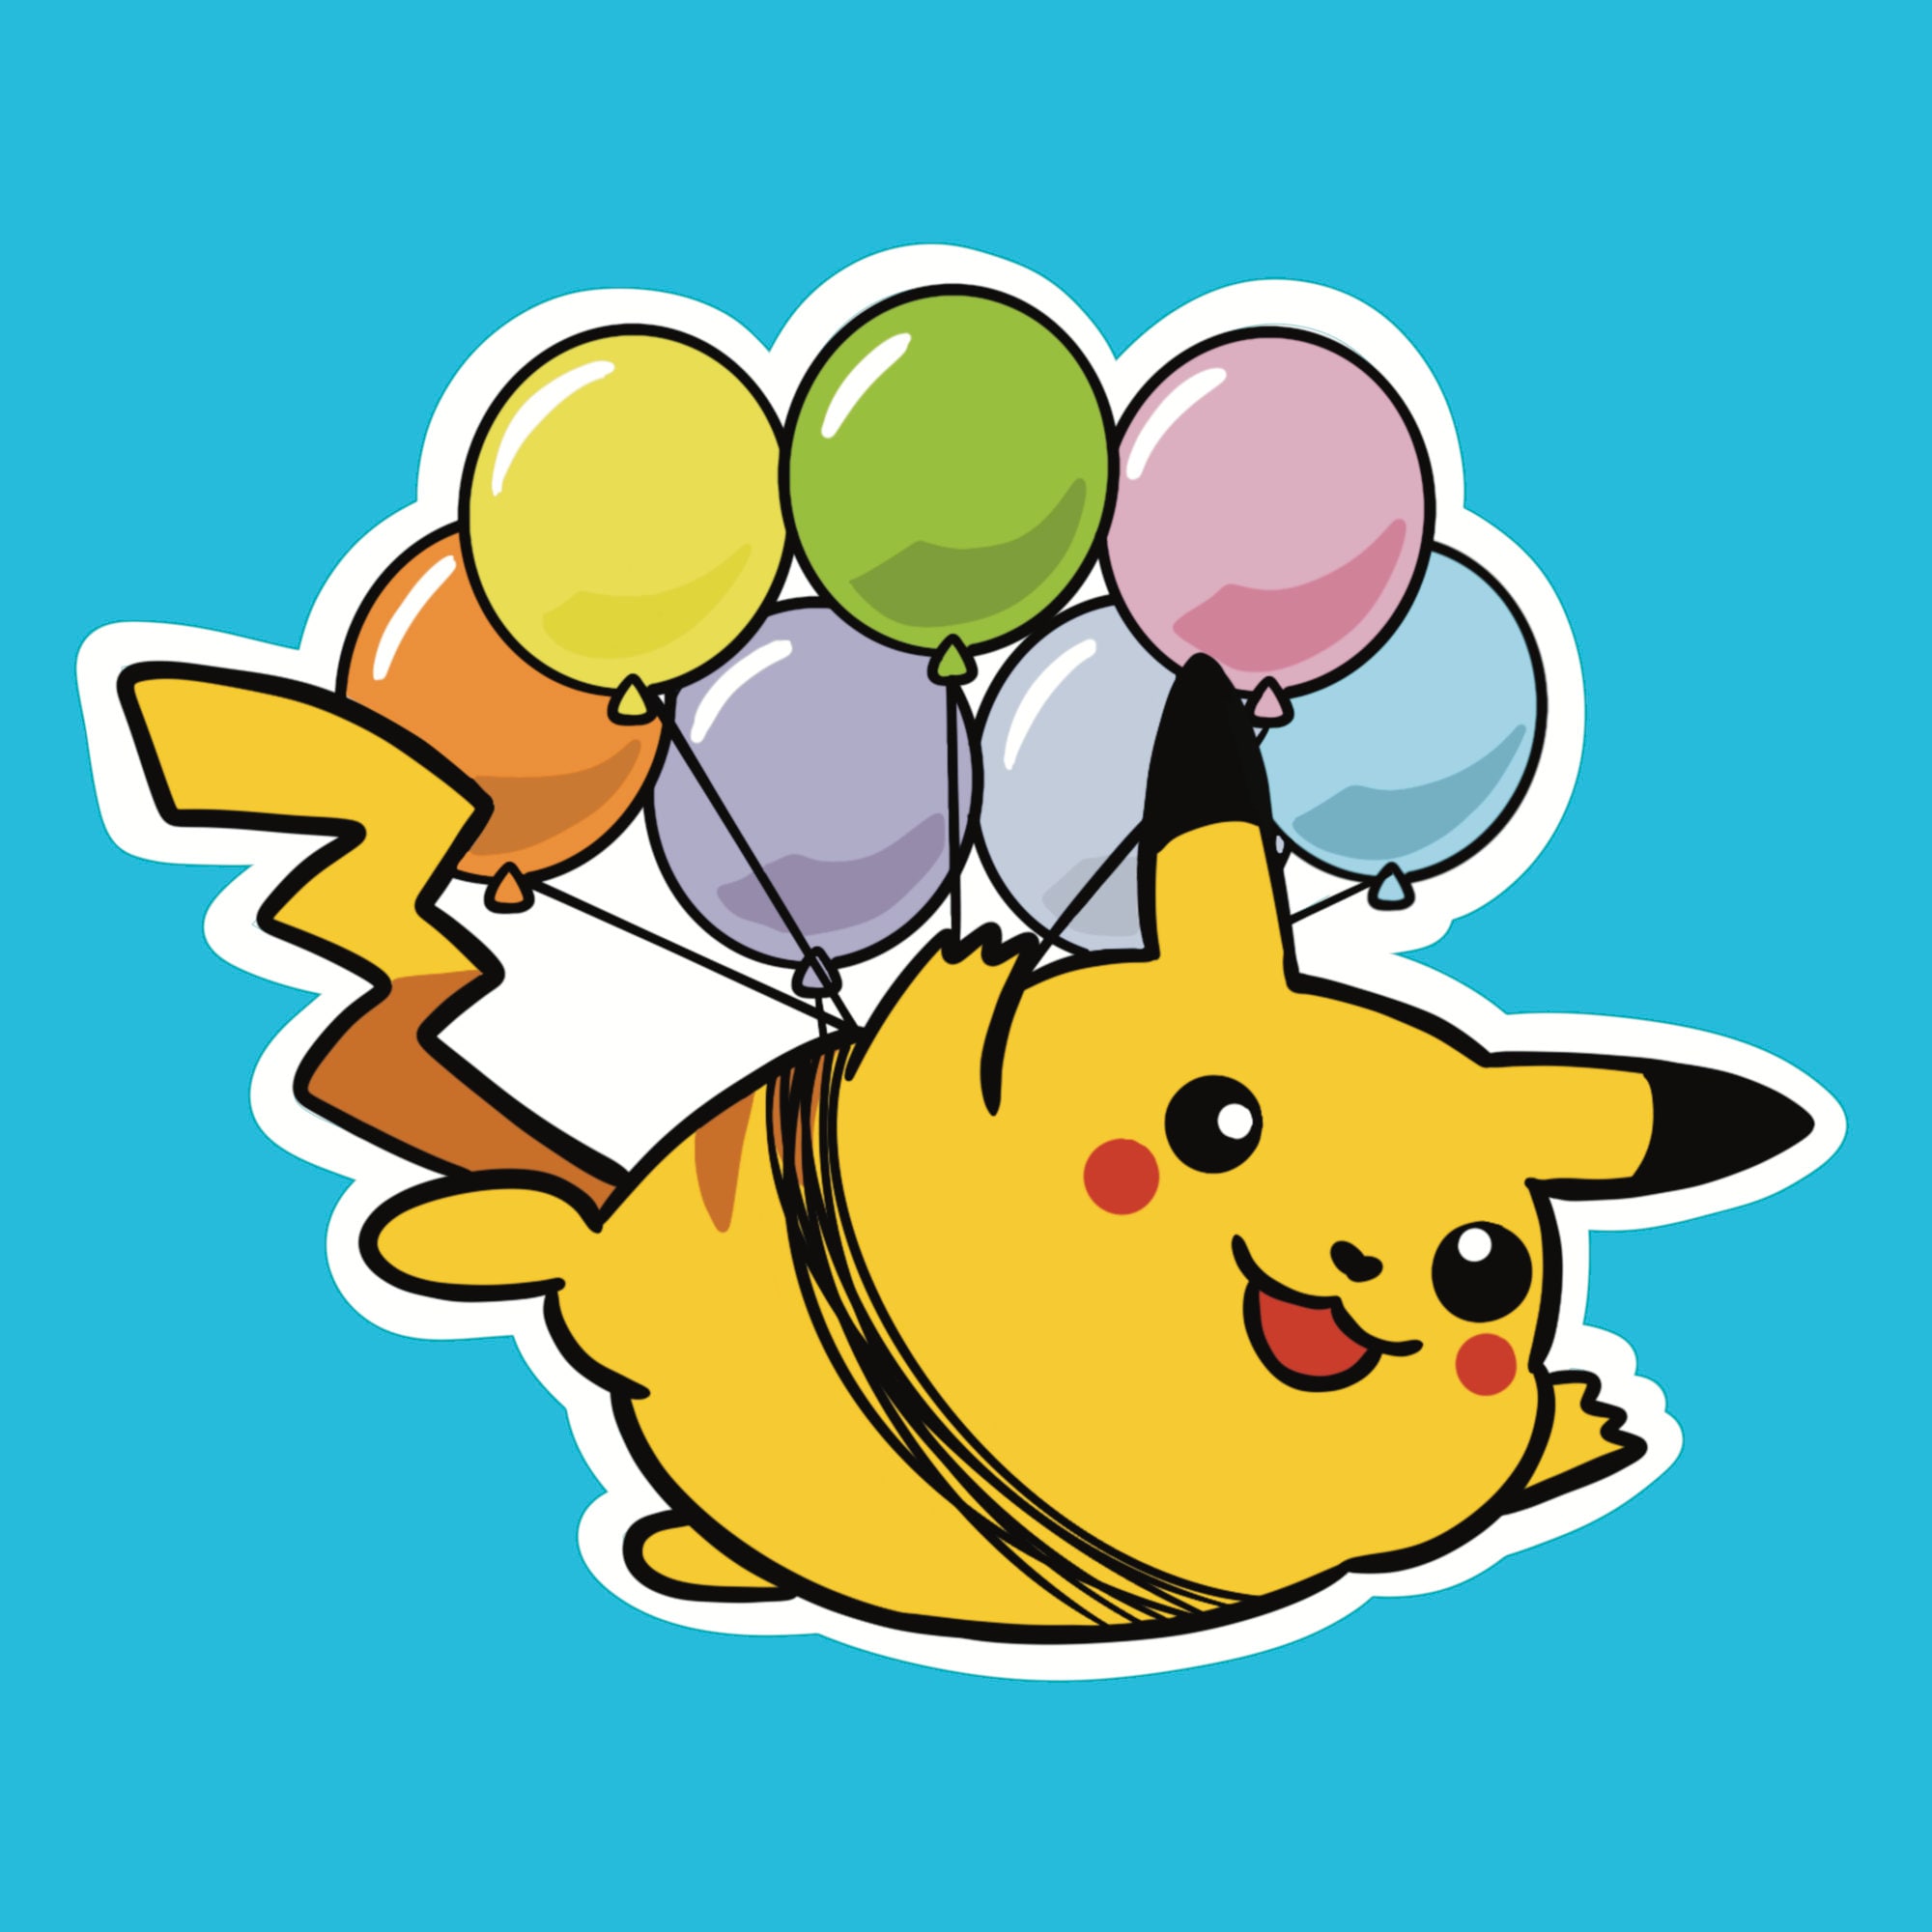 Shiny Pikachu (flying purple balloons) 